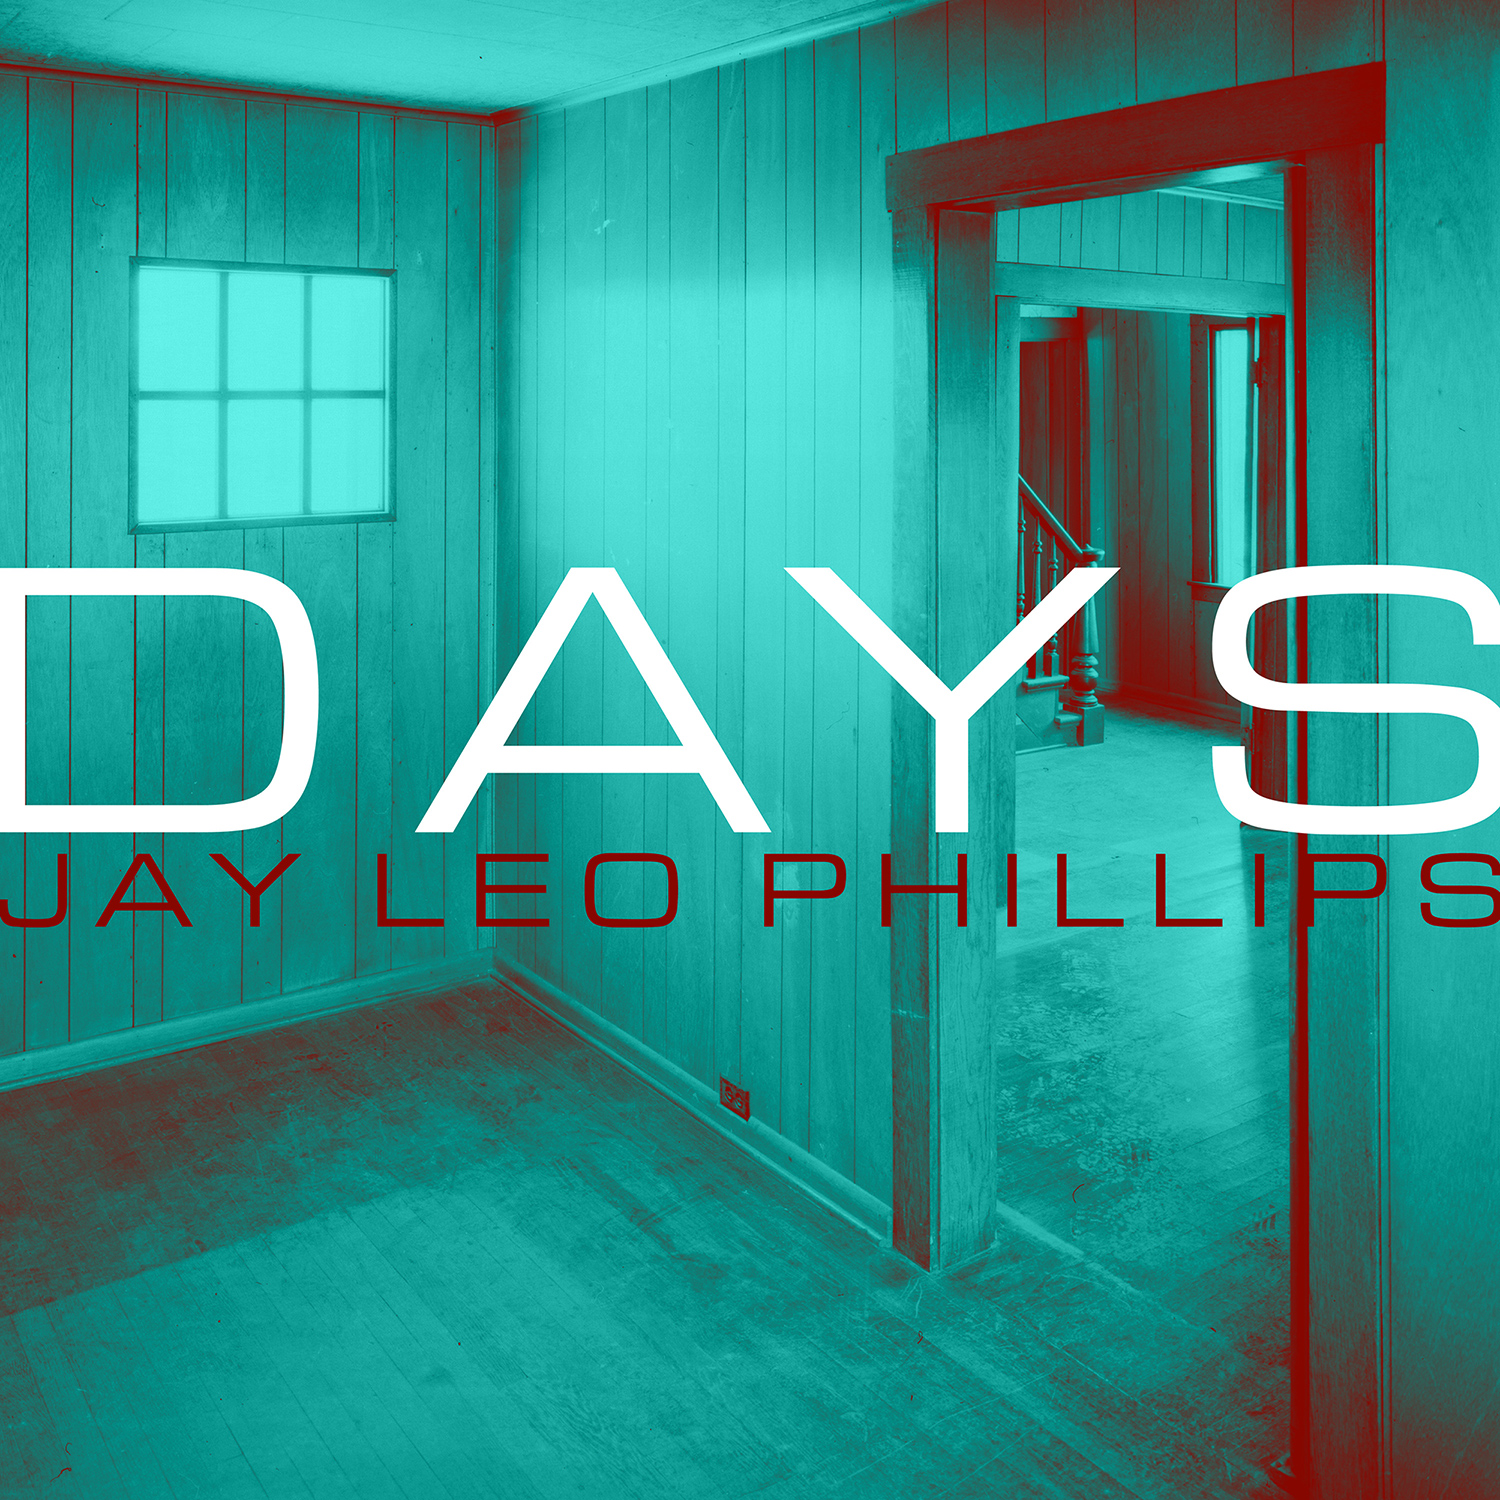 Jay Leo Phillips - Days